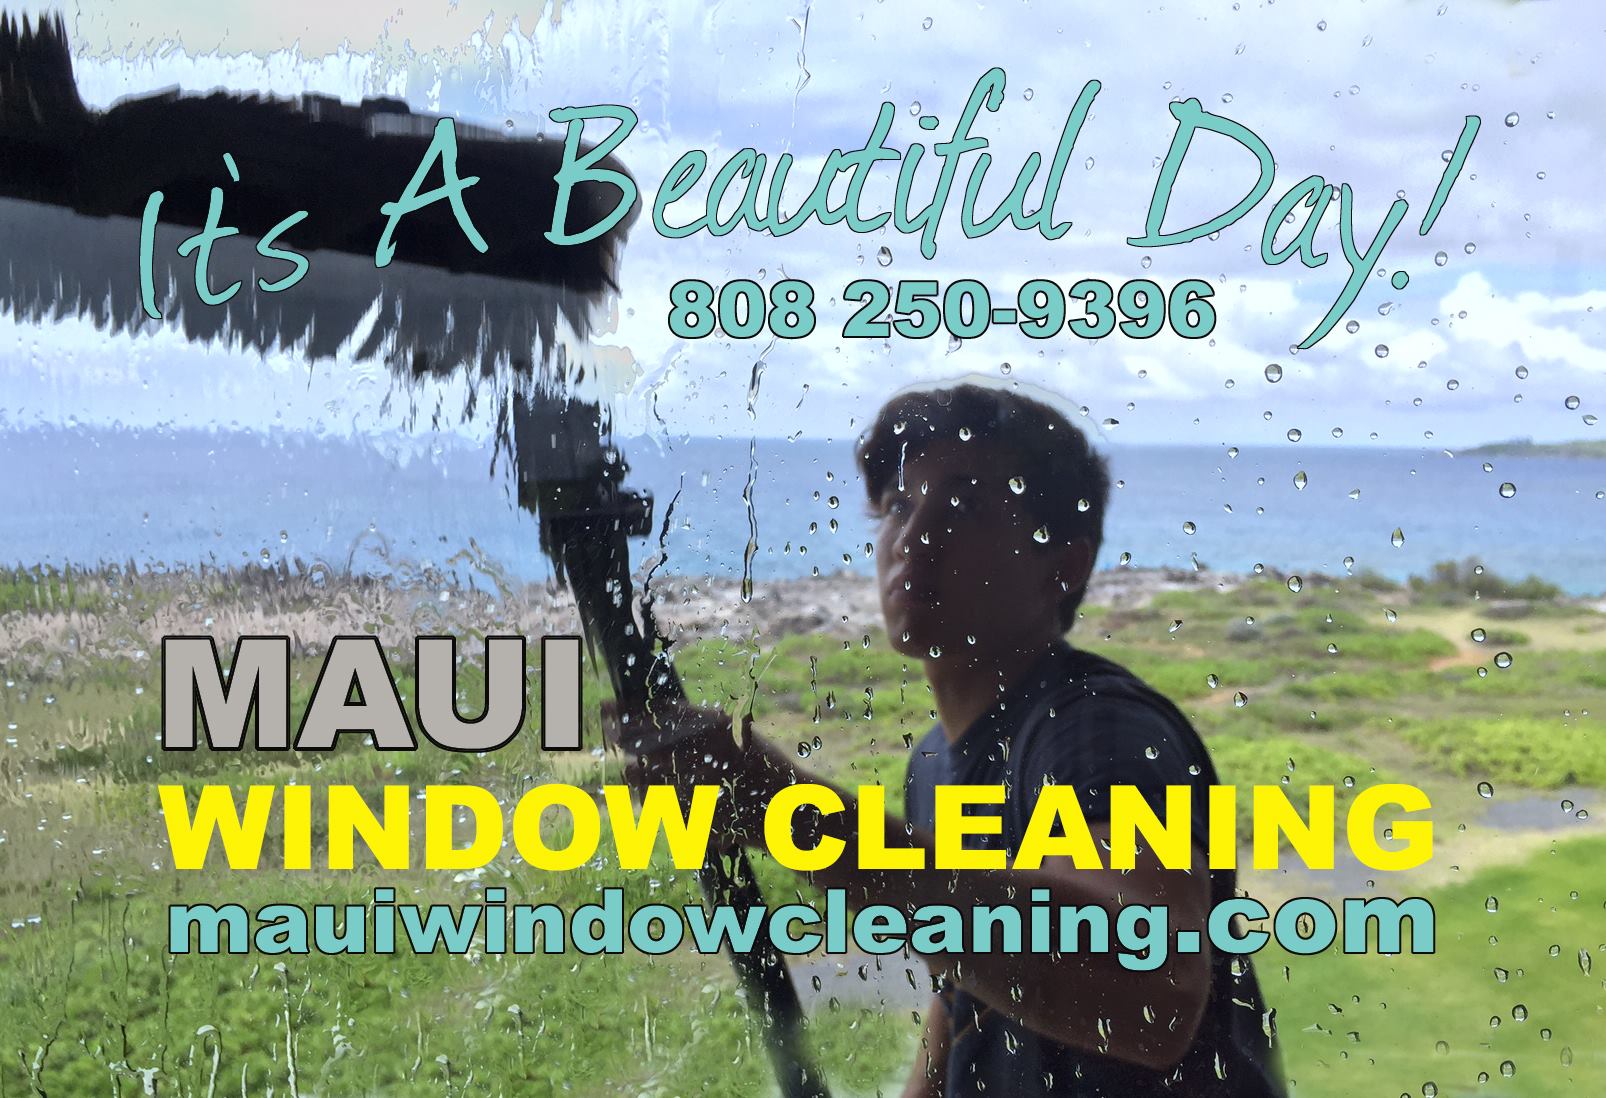 Maui Window Cleaning, Inc.